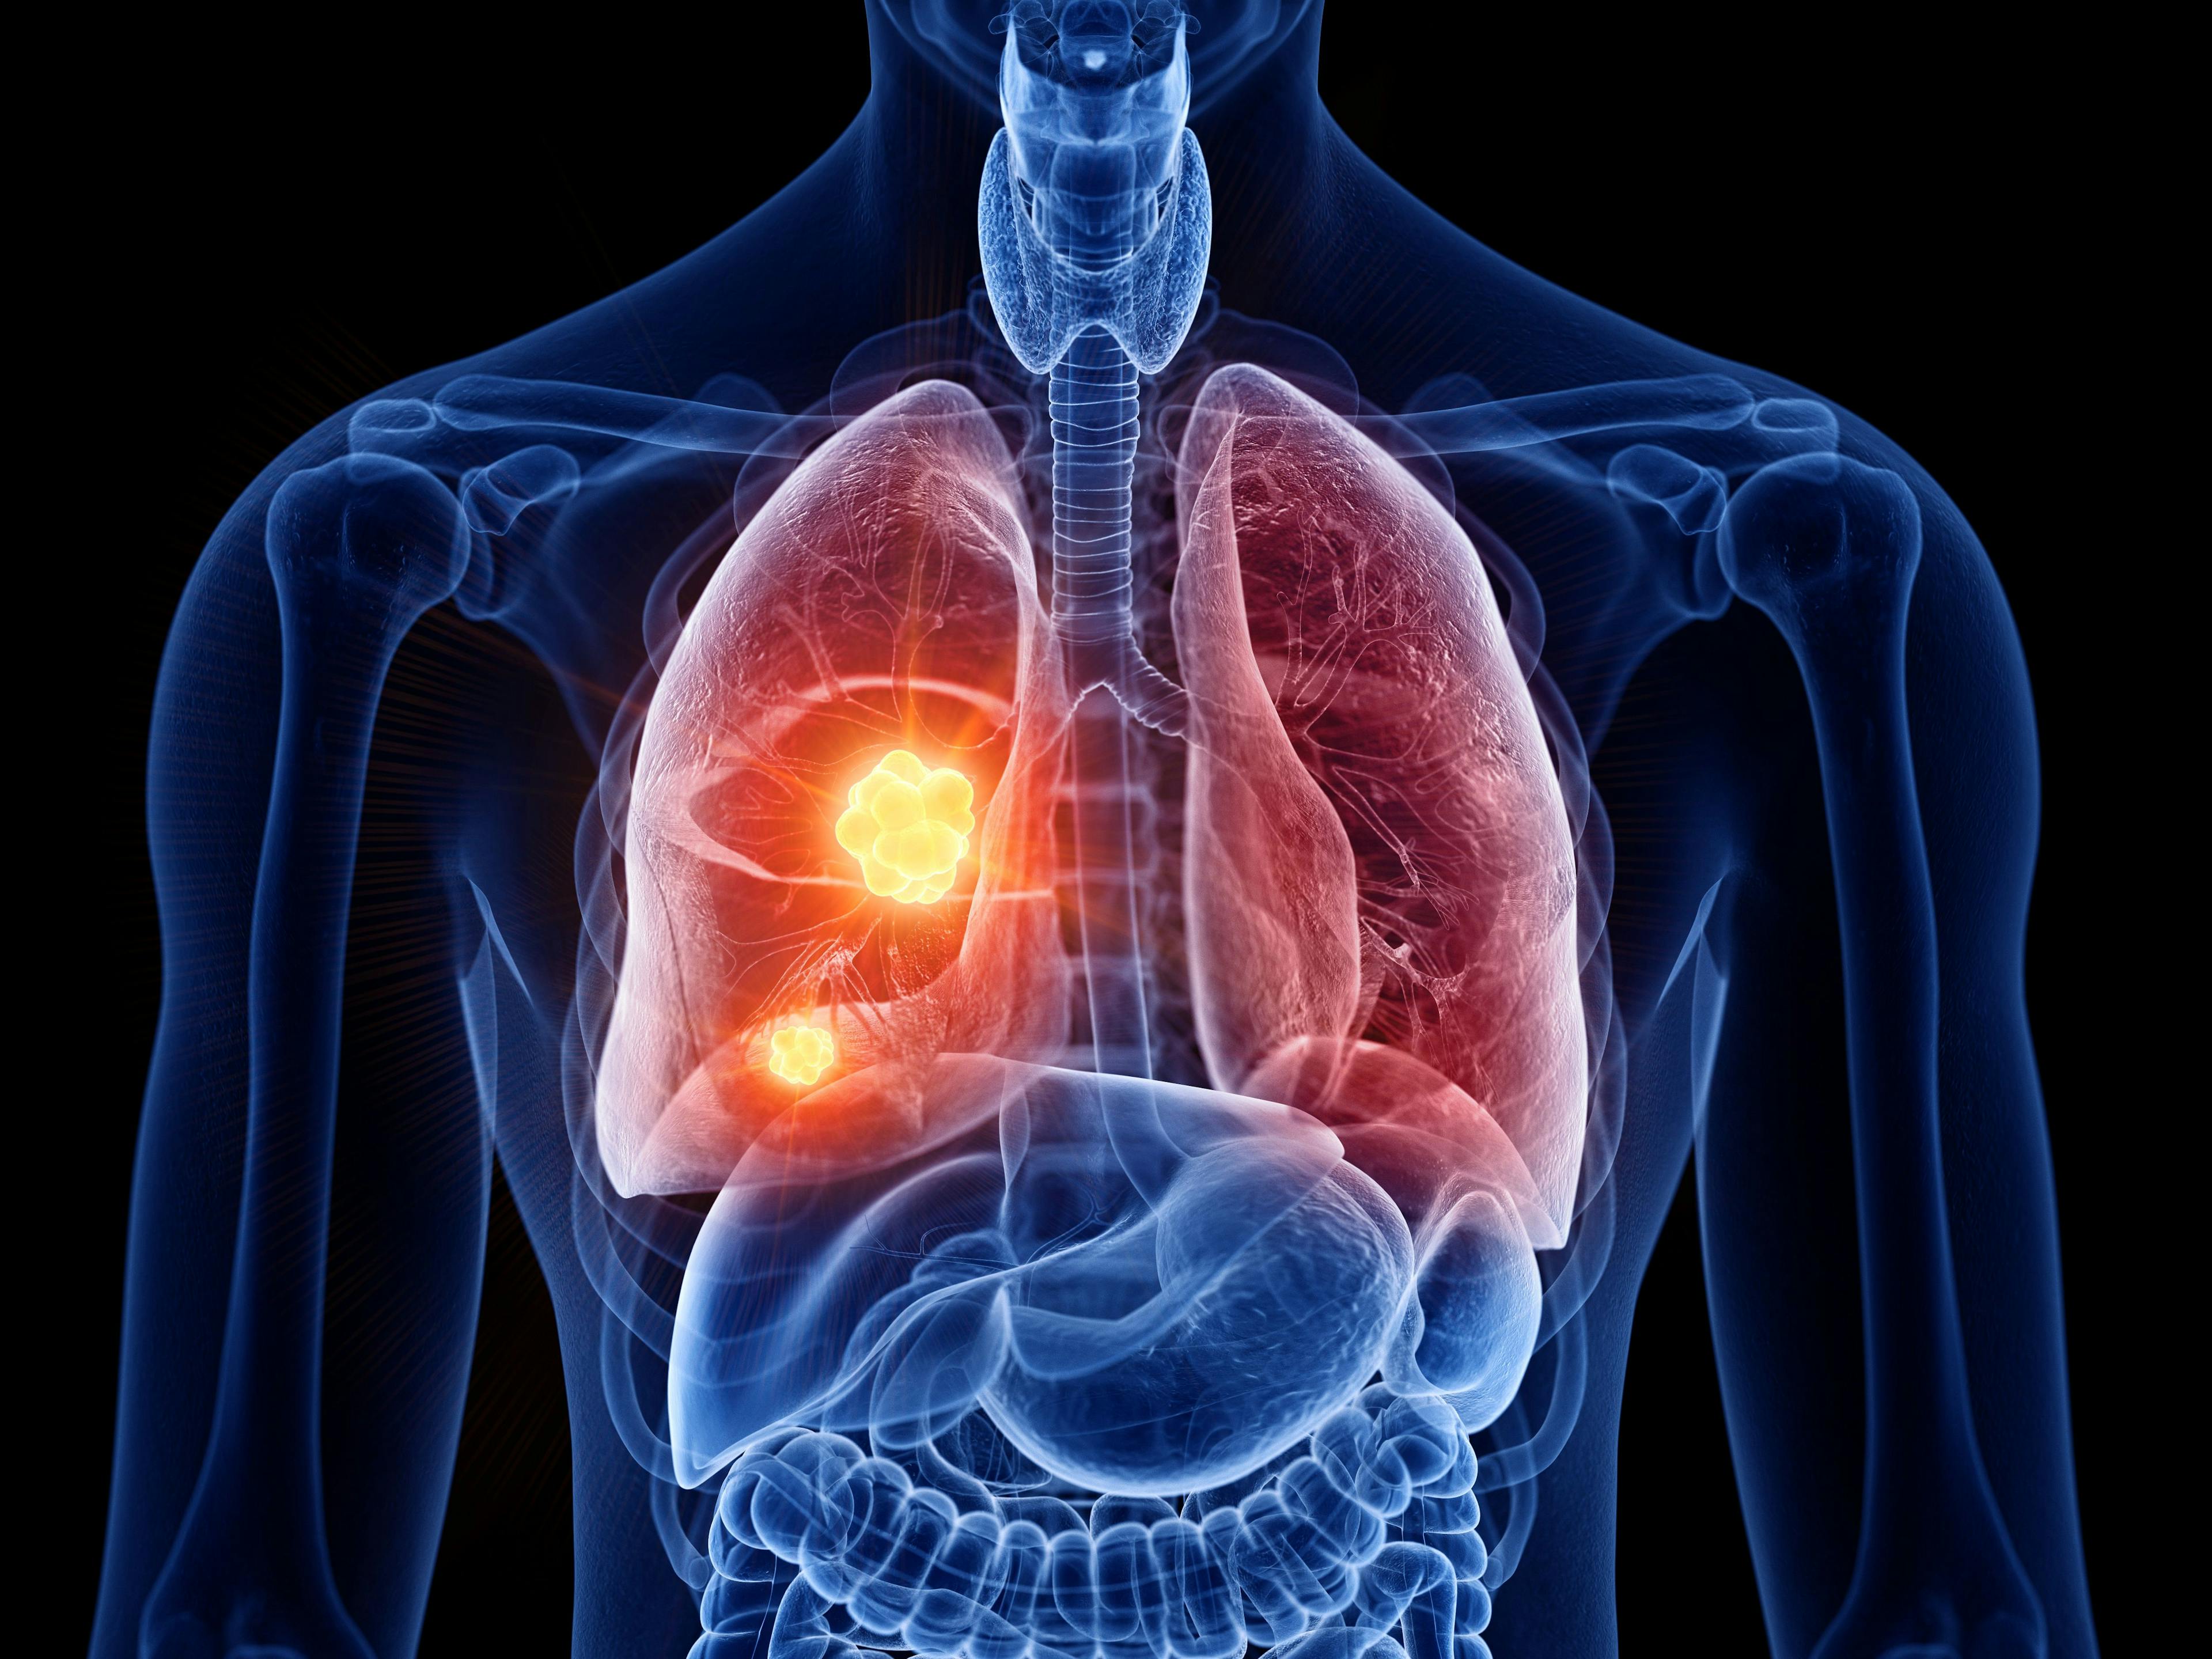 3d rendered medically accurate illustration of lung cancer | Image Credit: Sebastian Kaulitzki - stock.adobe.com